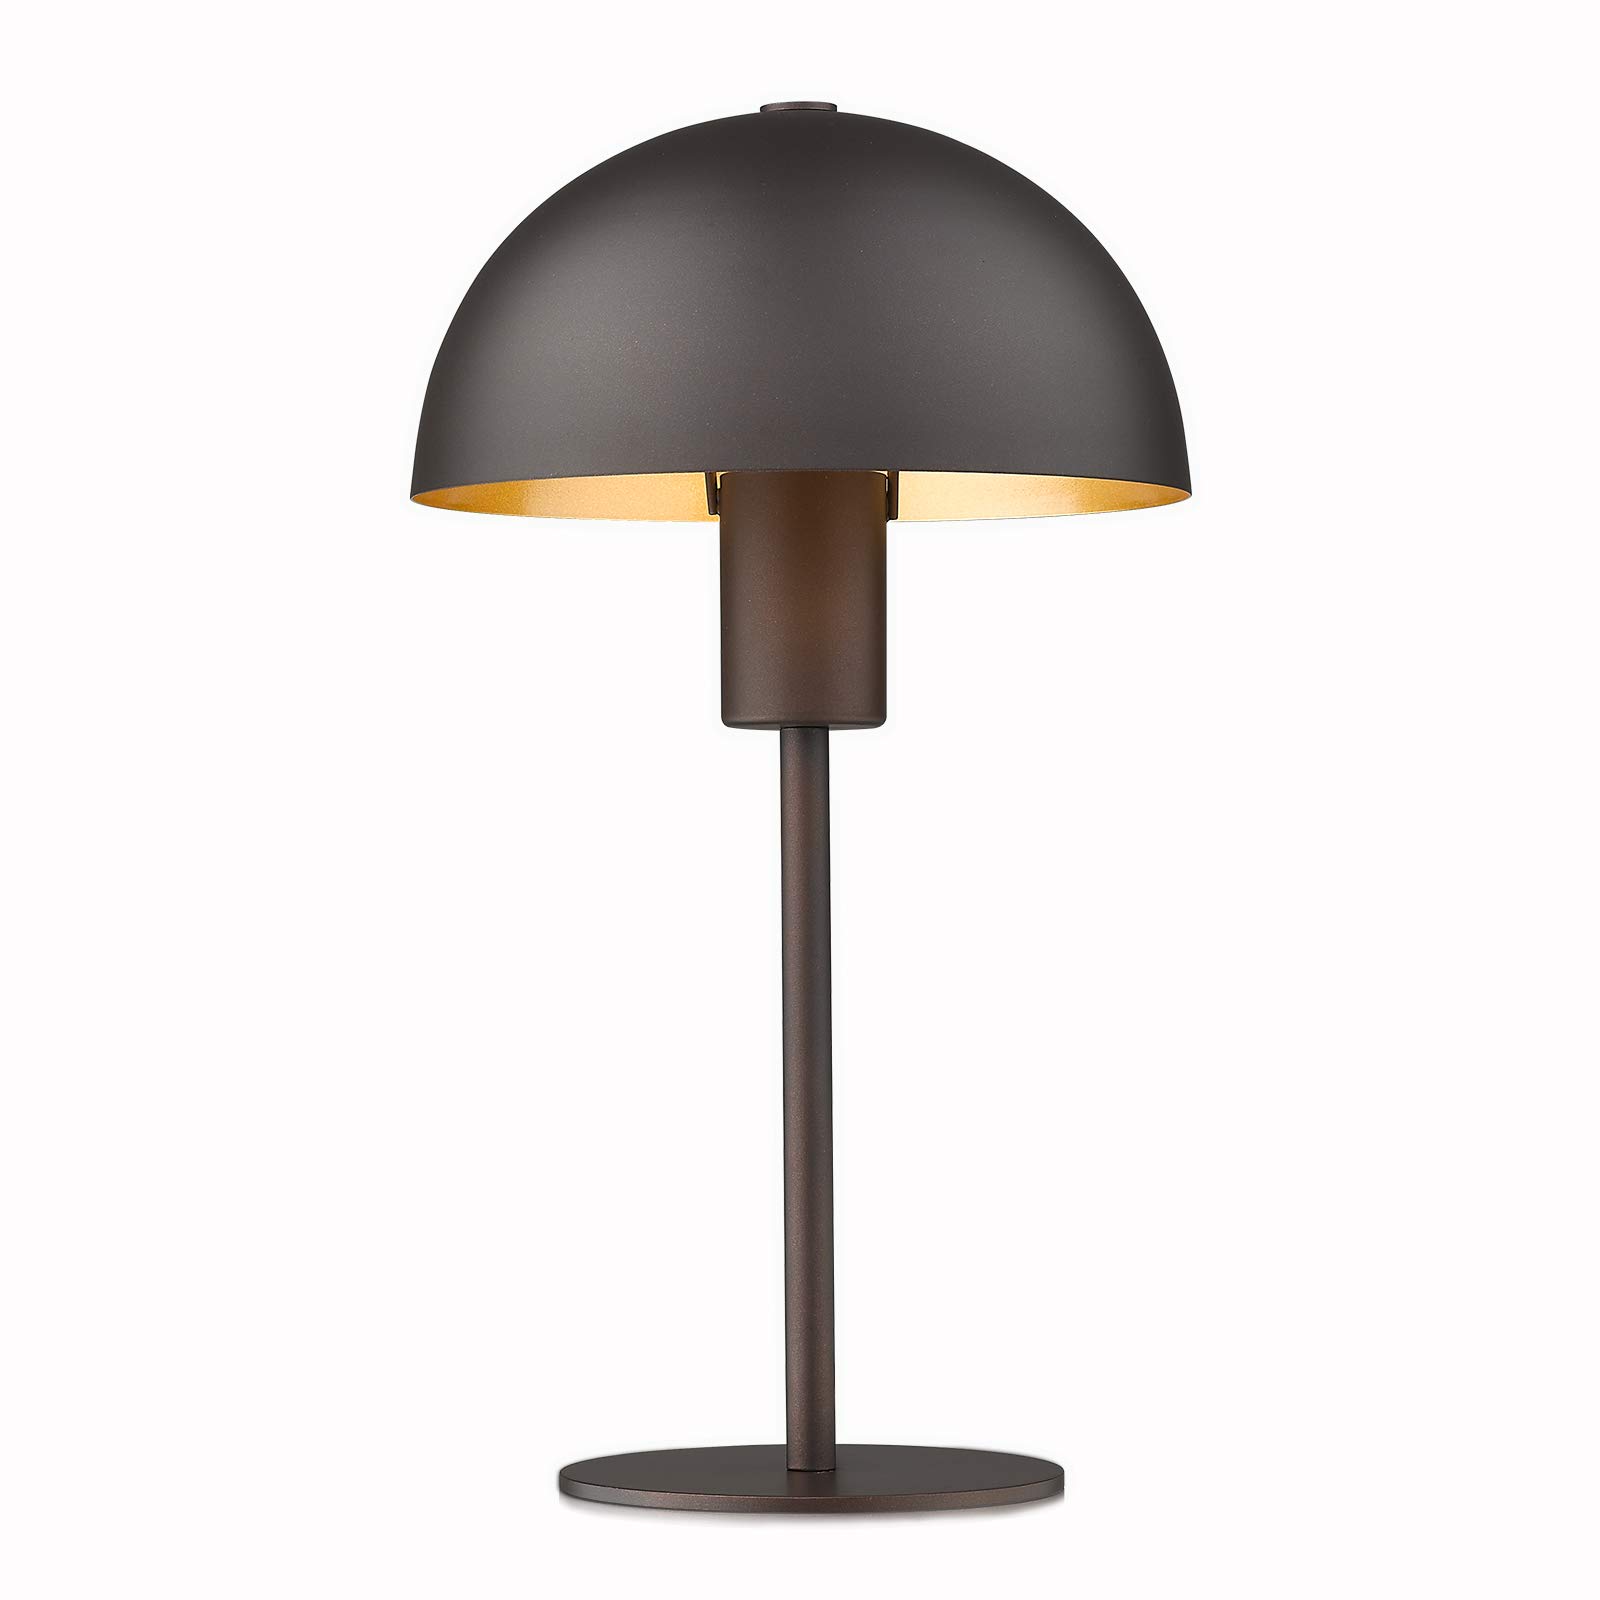 Industrial Nightstand Table Lamp, HWH Vintage Bedside Night Light for Bedroom, Office, Dorm, Oil-Rubbed Bronze, 5HZG17TL-ORB